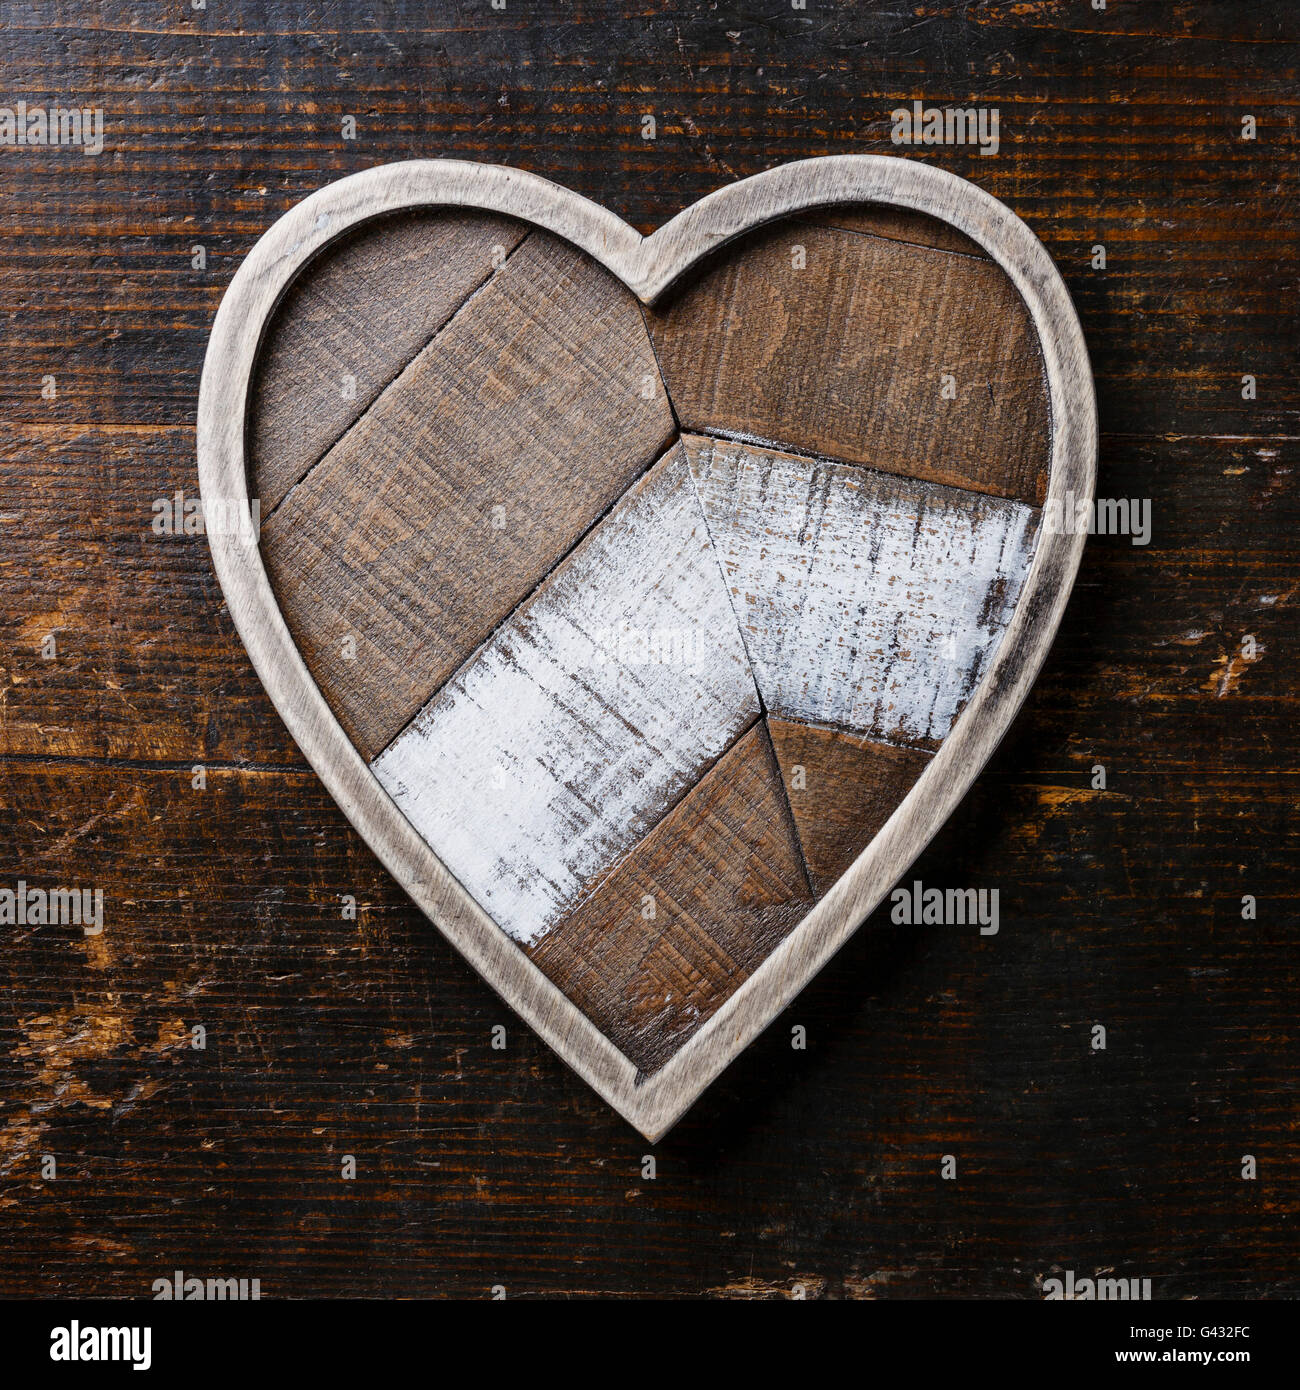 Heart shape wooden tray on dark wooden background Stock Photo